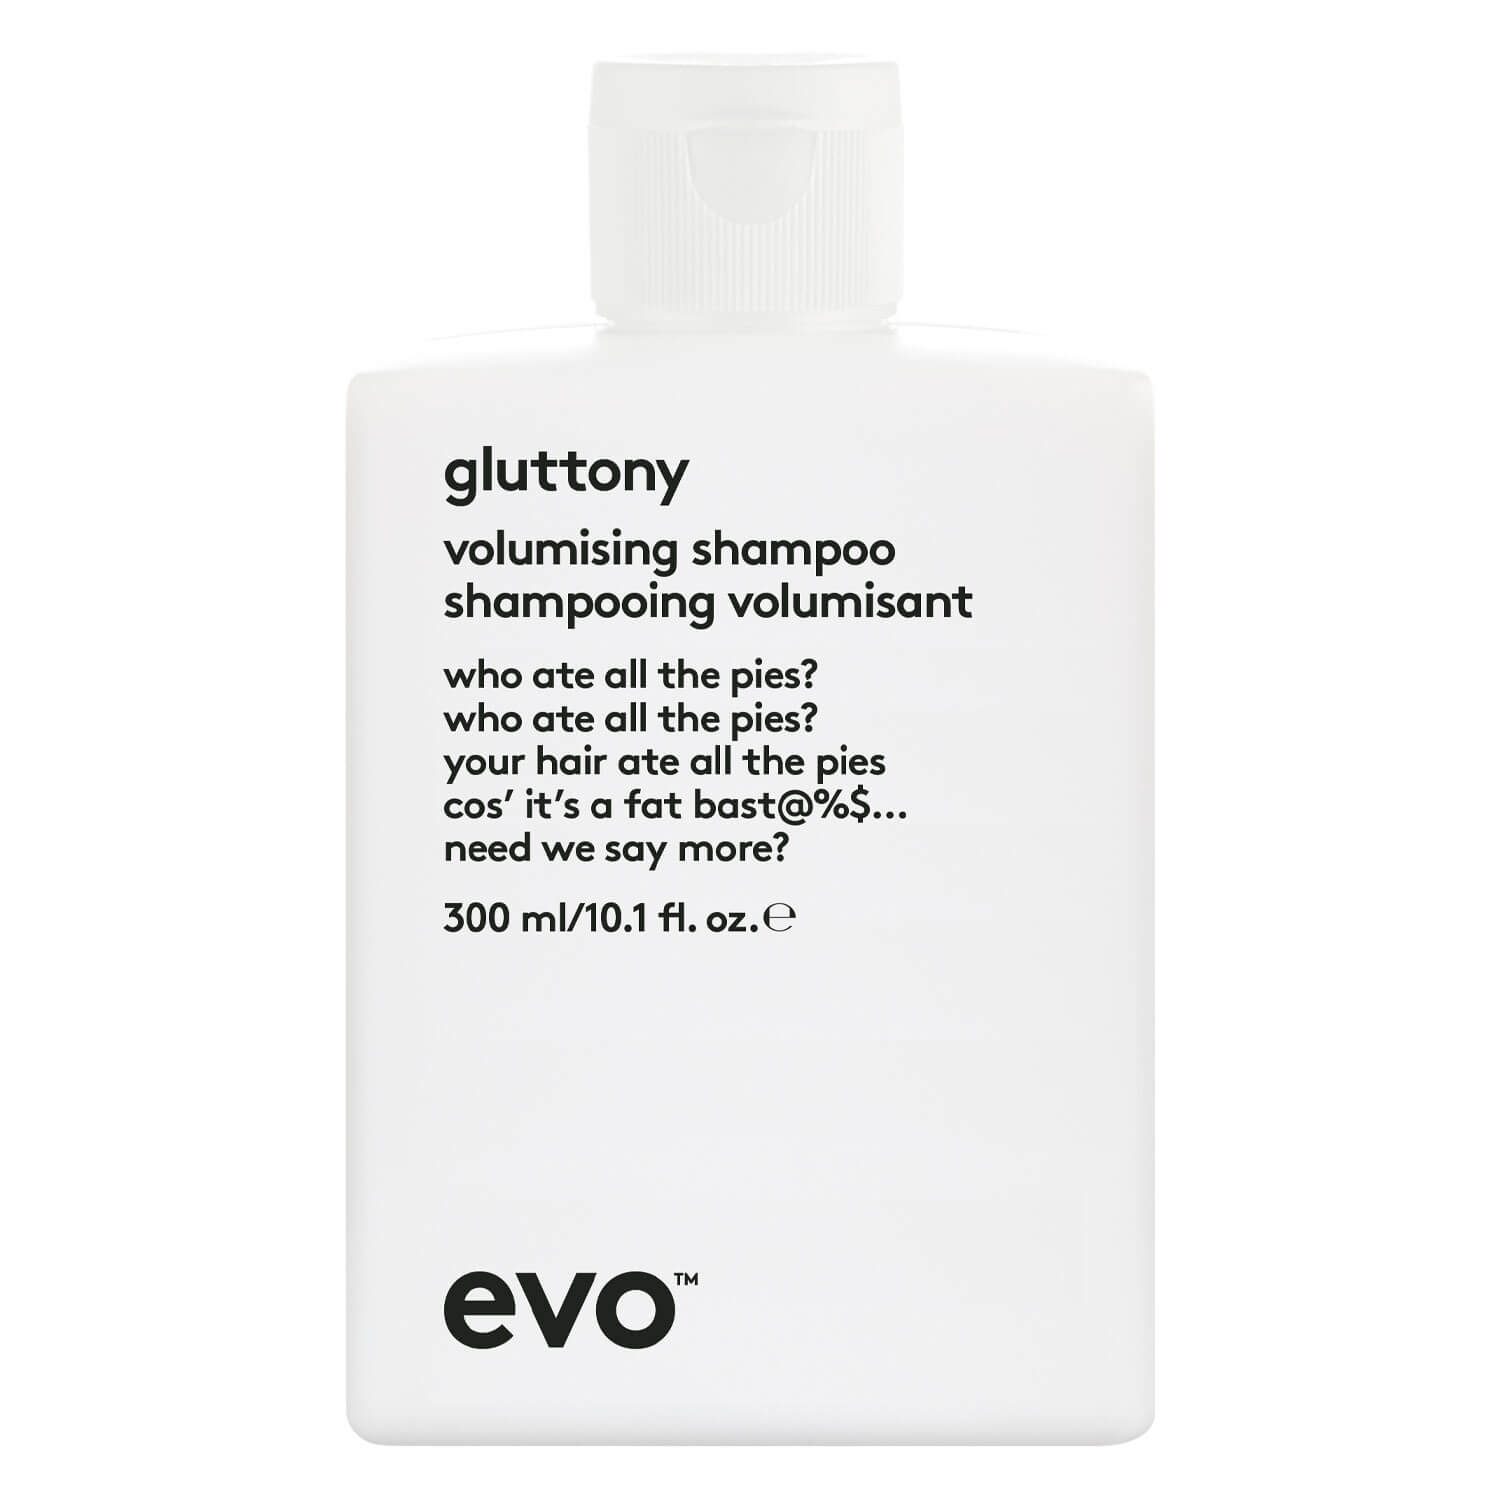 Product image from evo volume - gluttony volumising shampoo